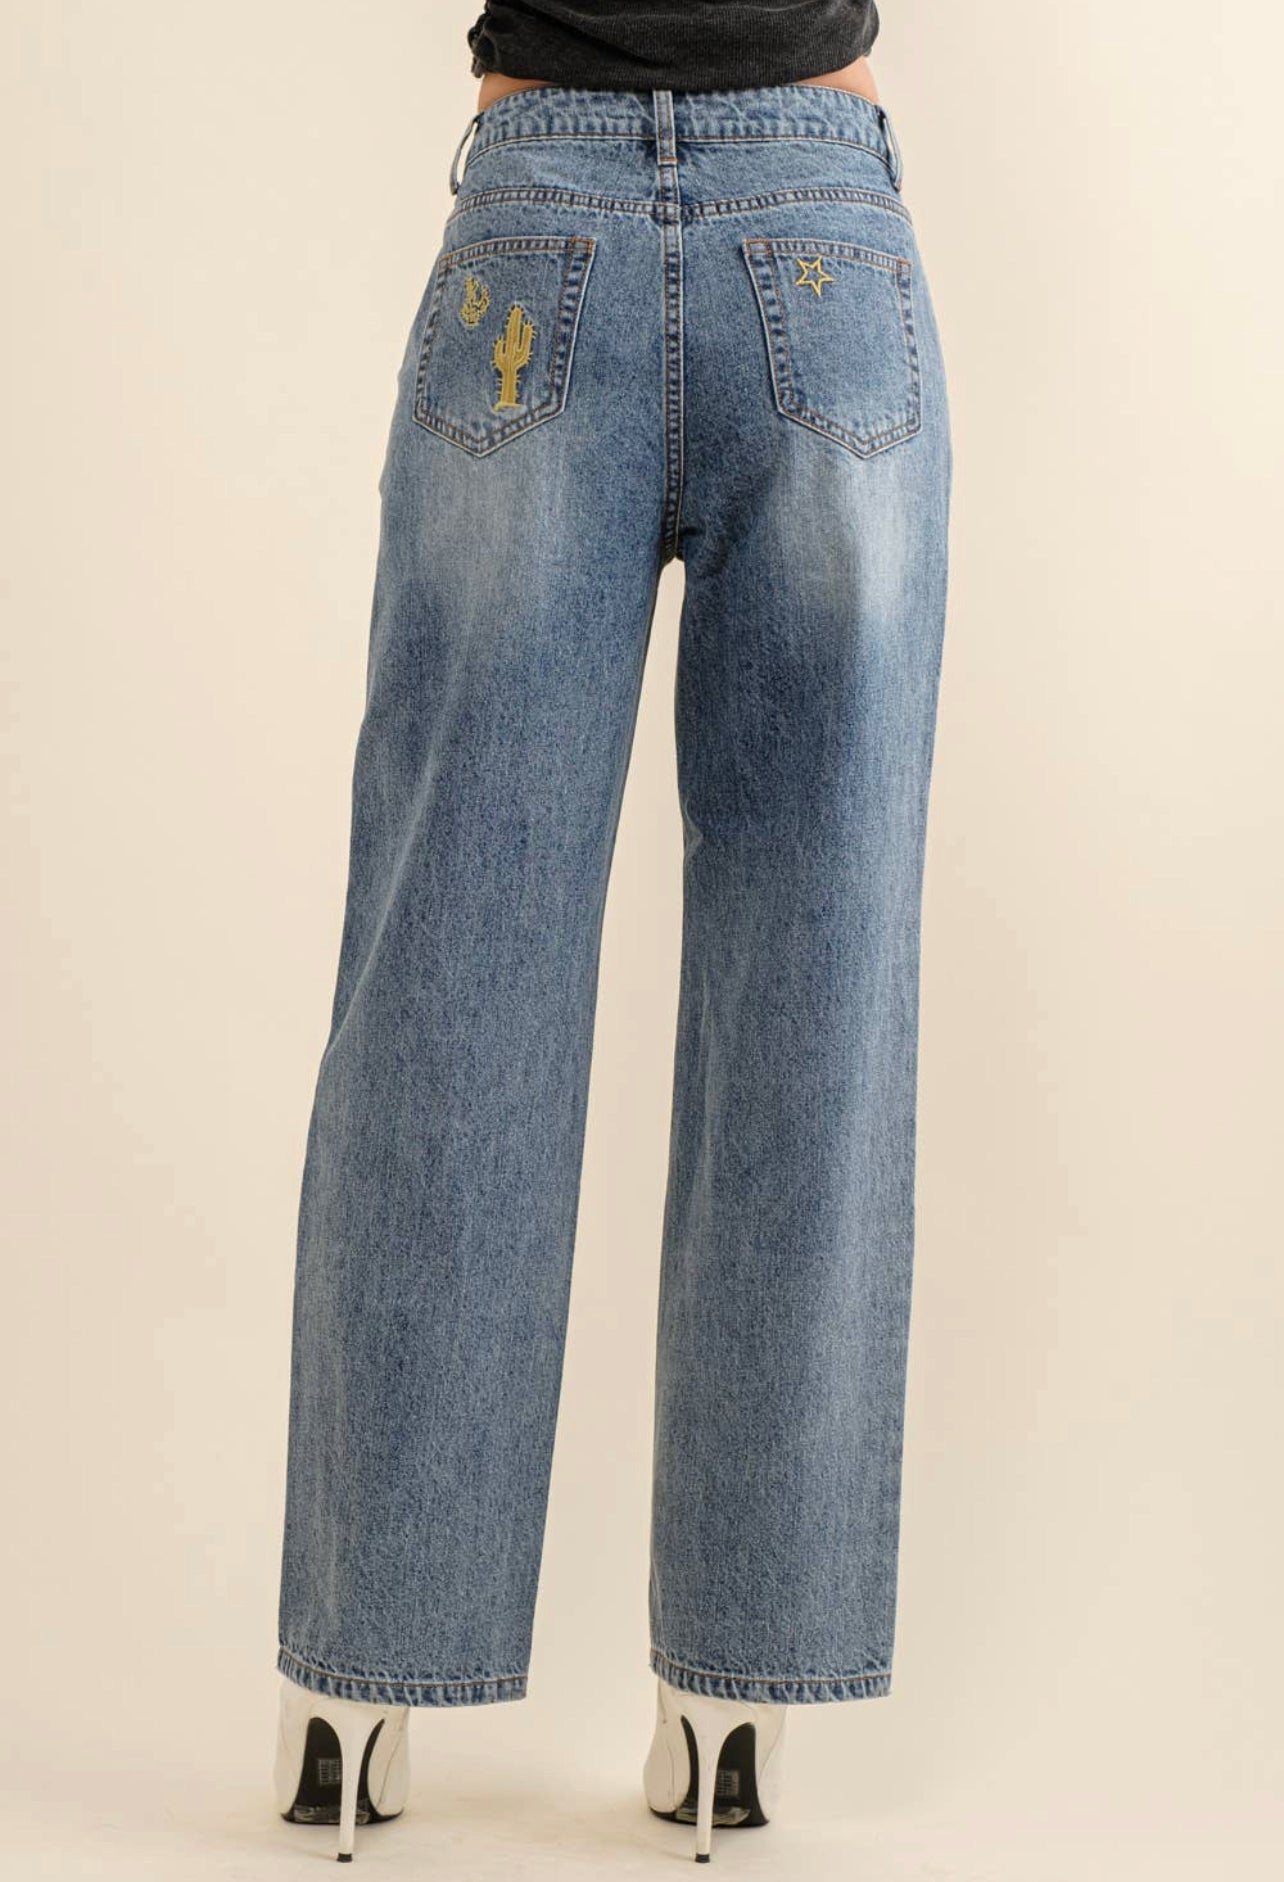 Western Embroidered Denim Jeans